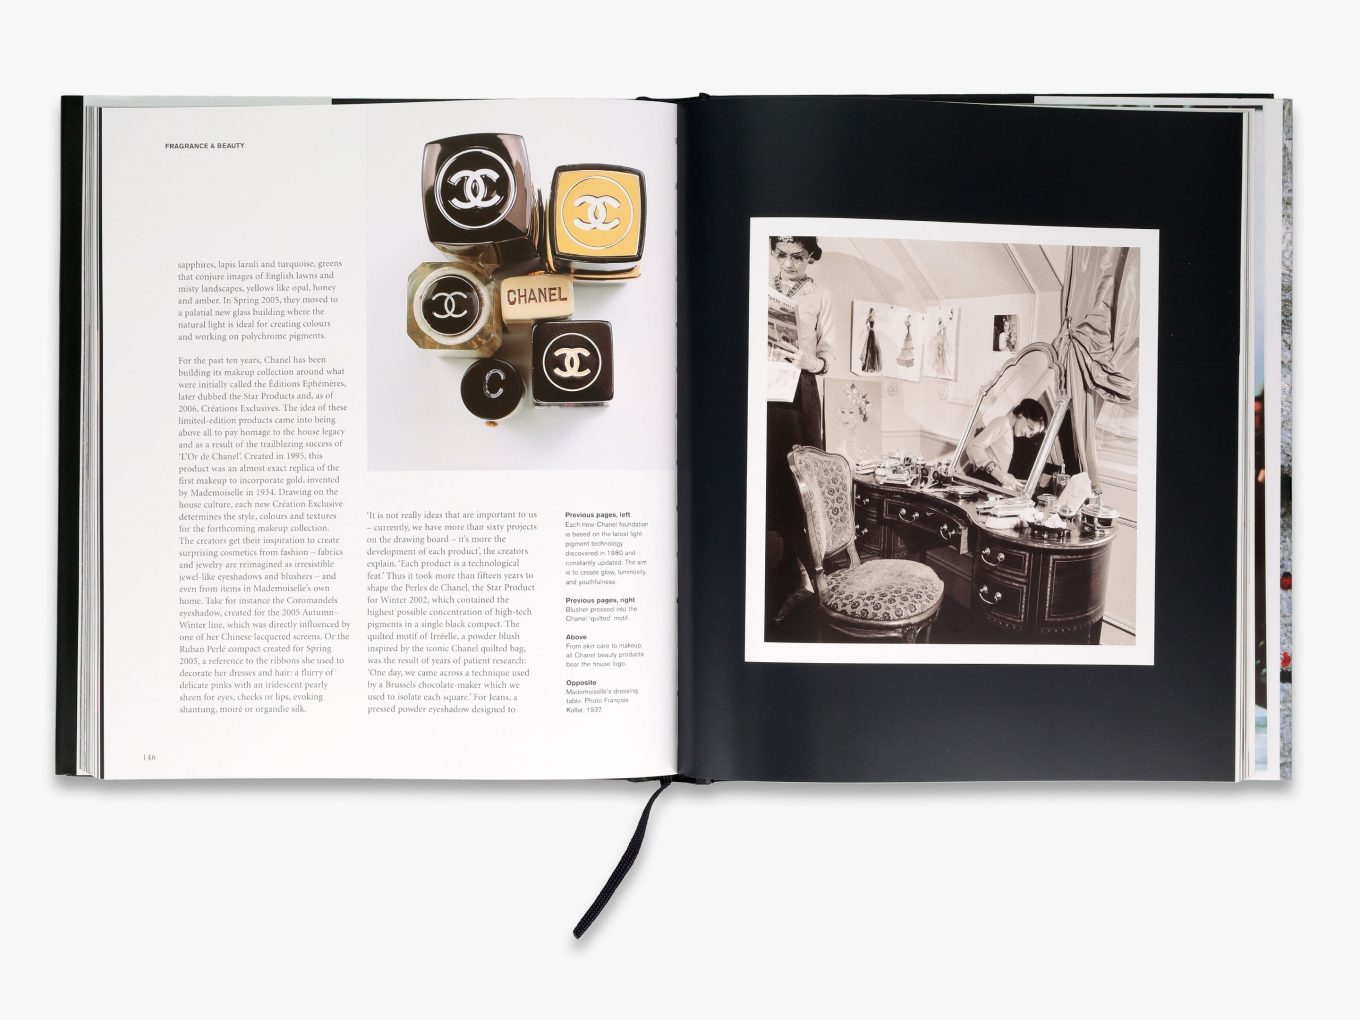 Books Kinokuniya: Chanel : Collections and Creations / Bott, Dani